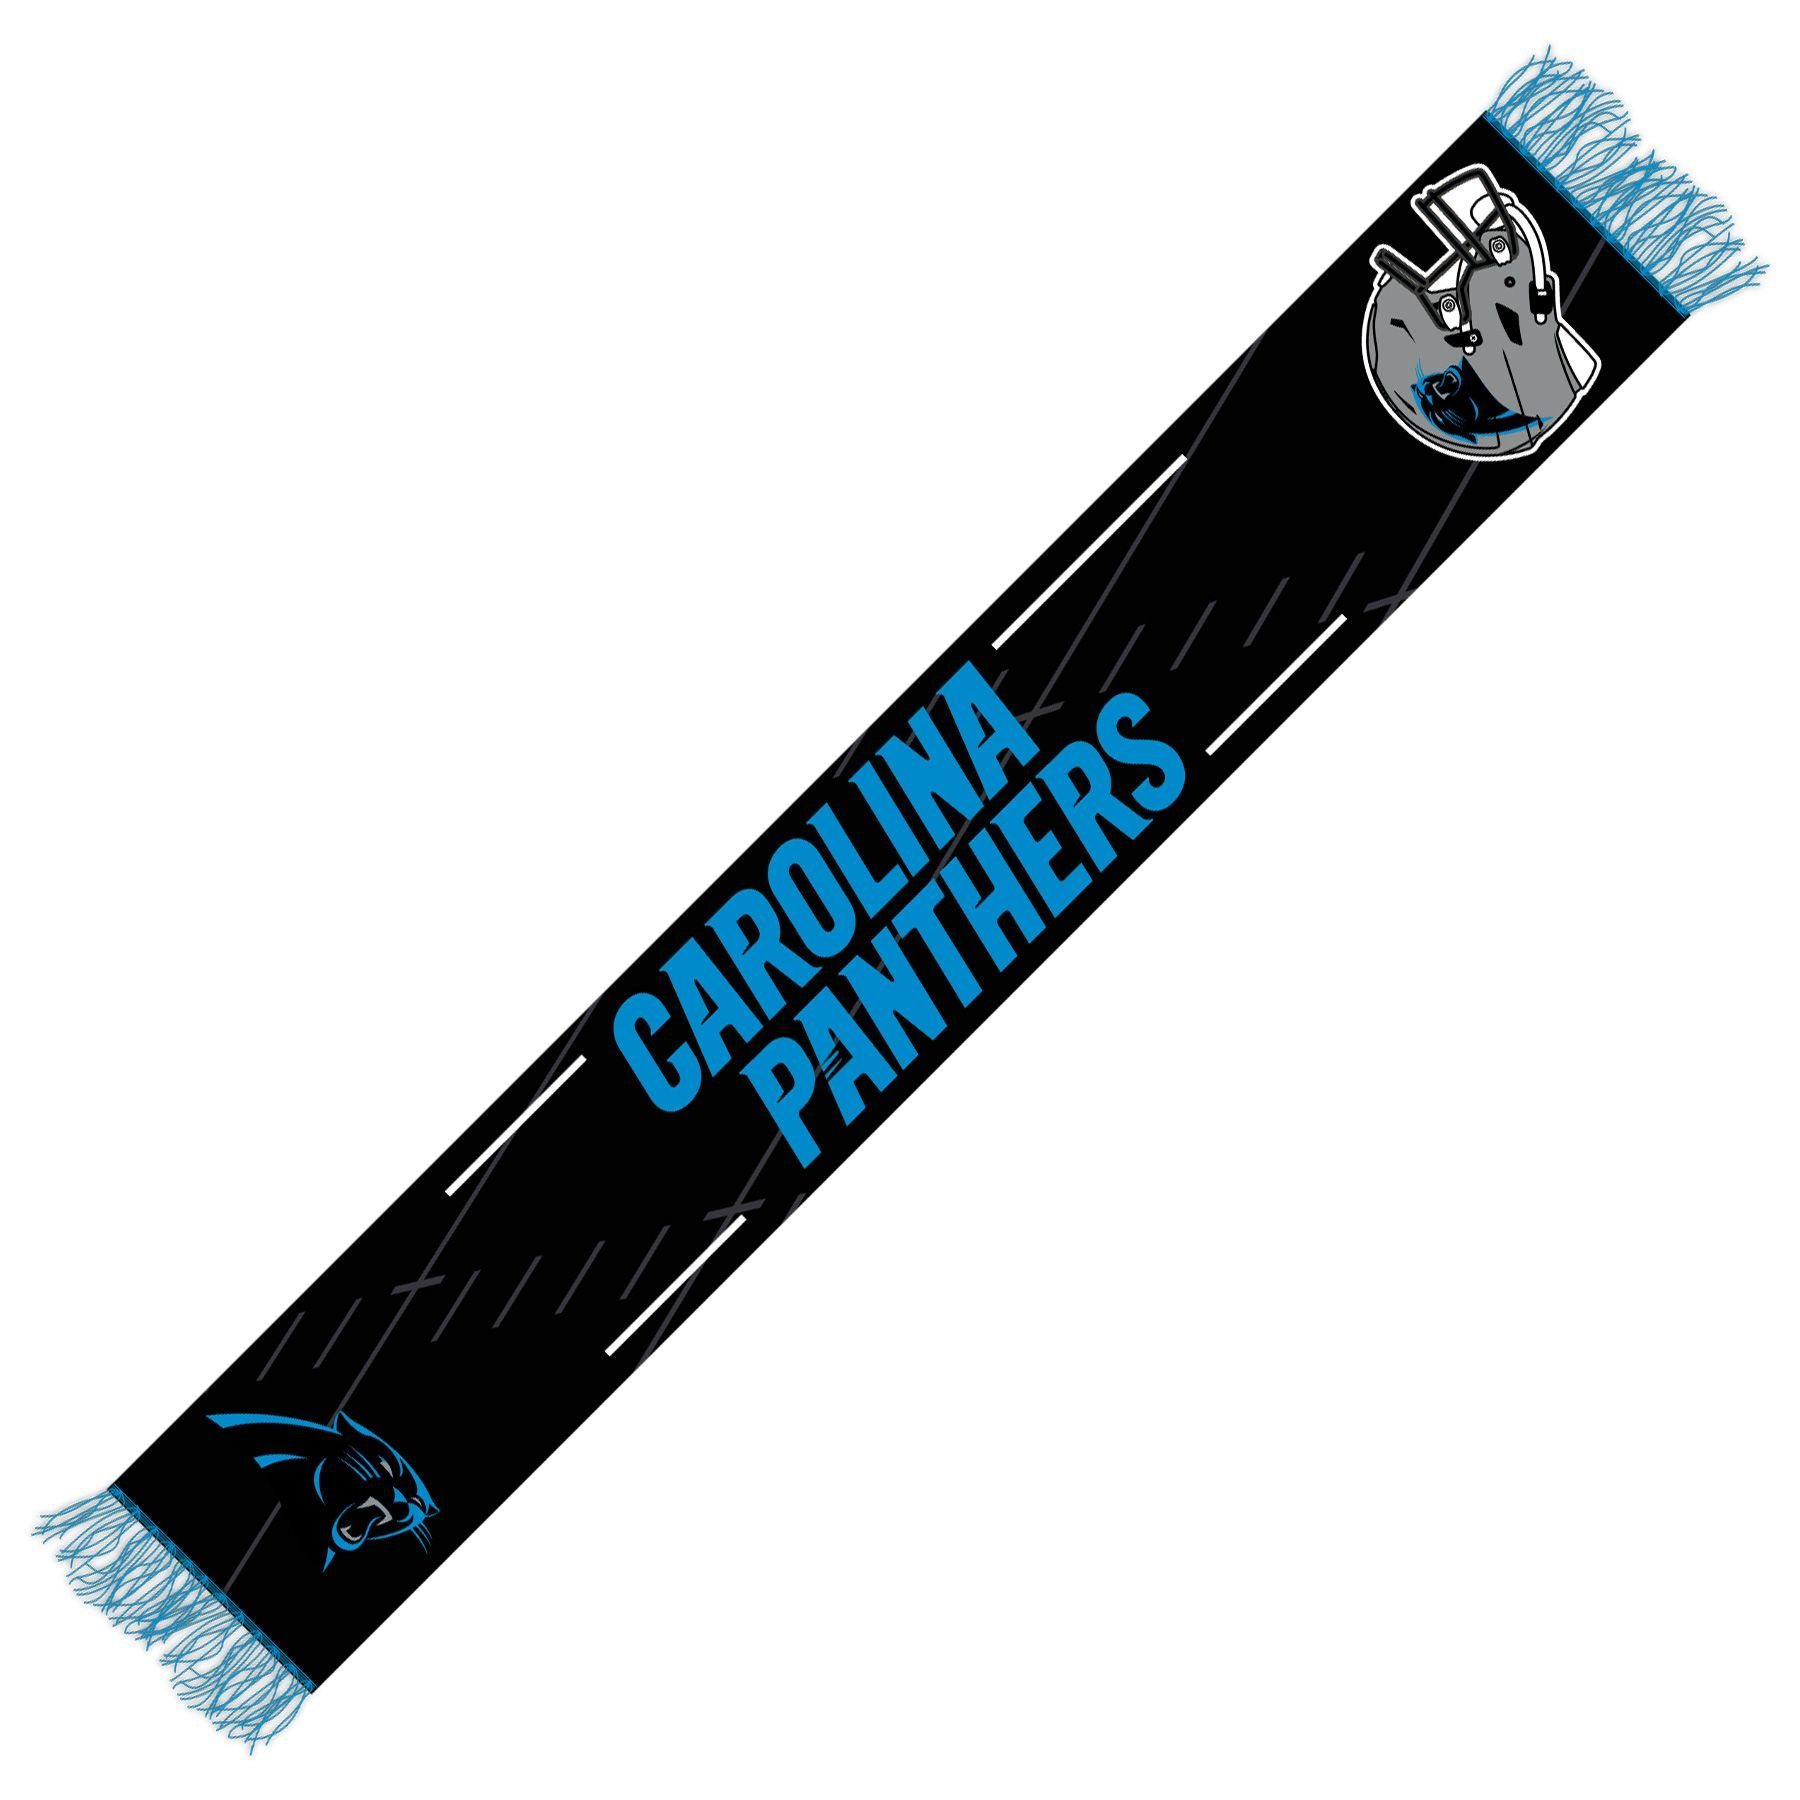 Great Branding Great NFL Multifunktionstuch Carolina Branding Teams Panthers